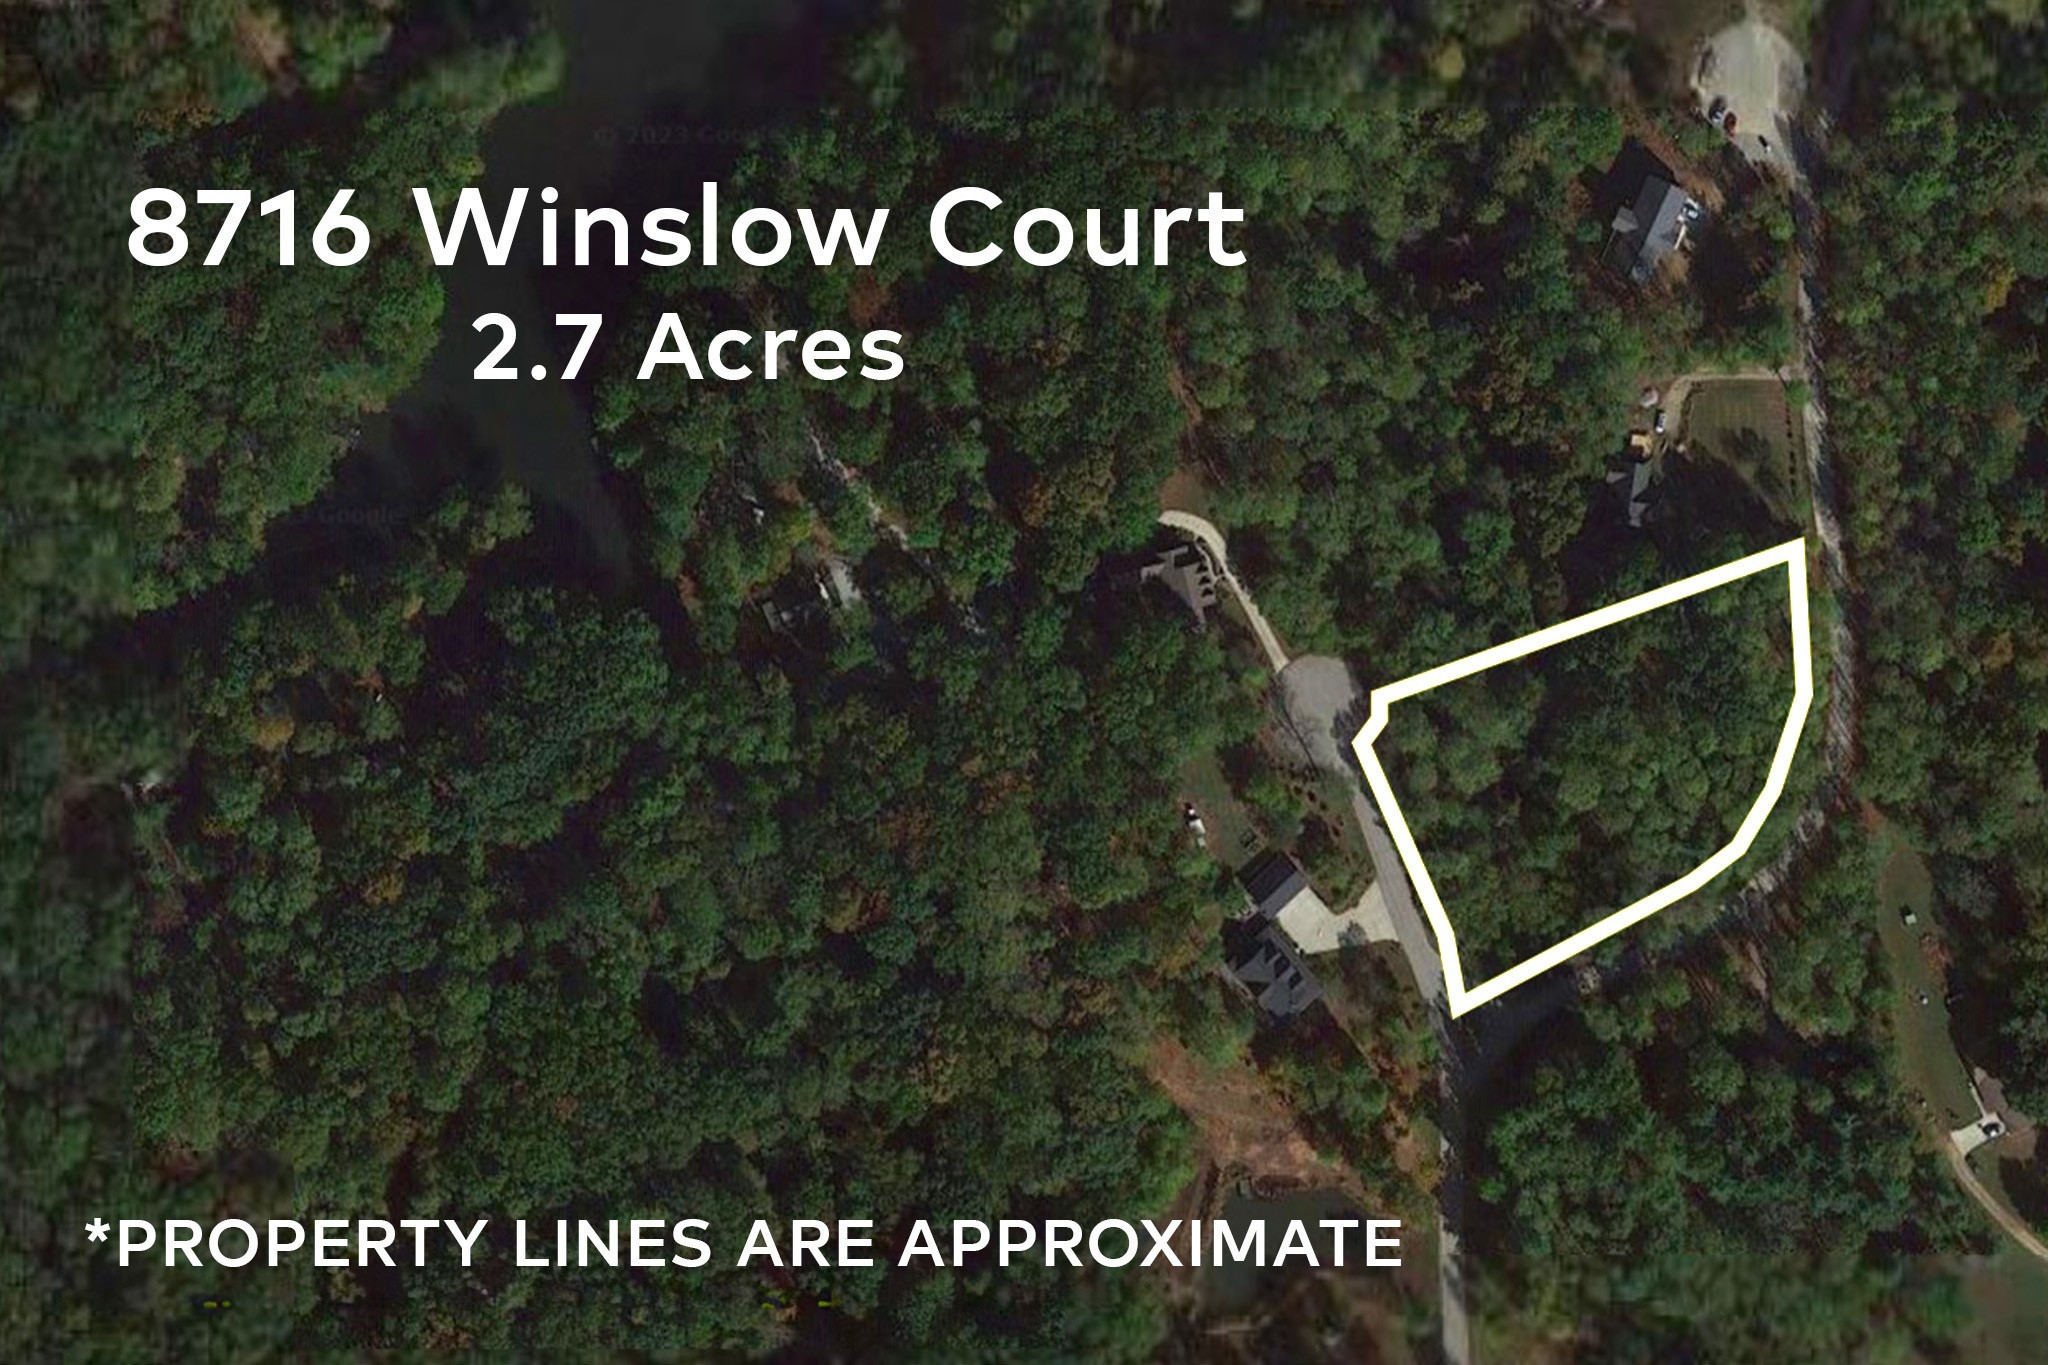 5. 8716 Winslow Court